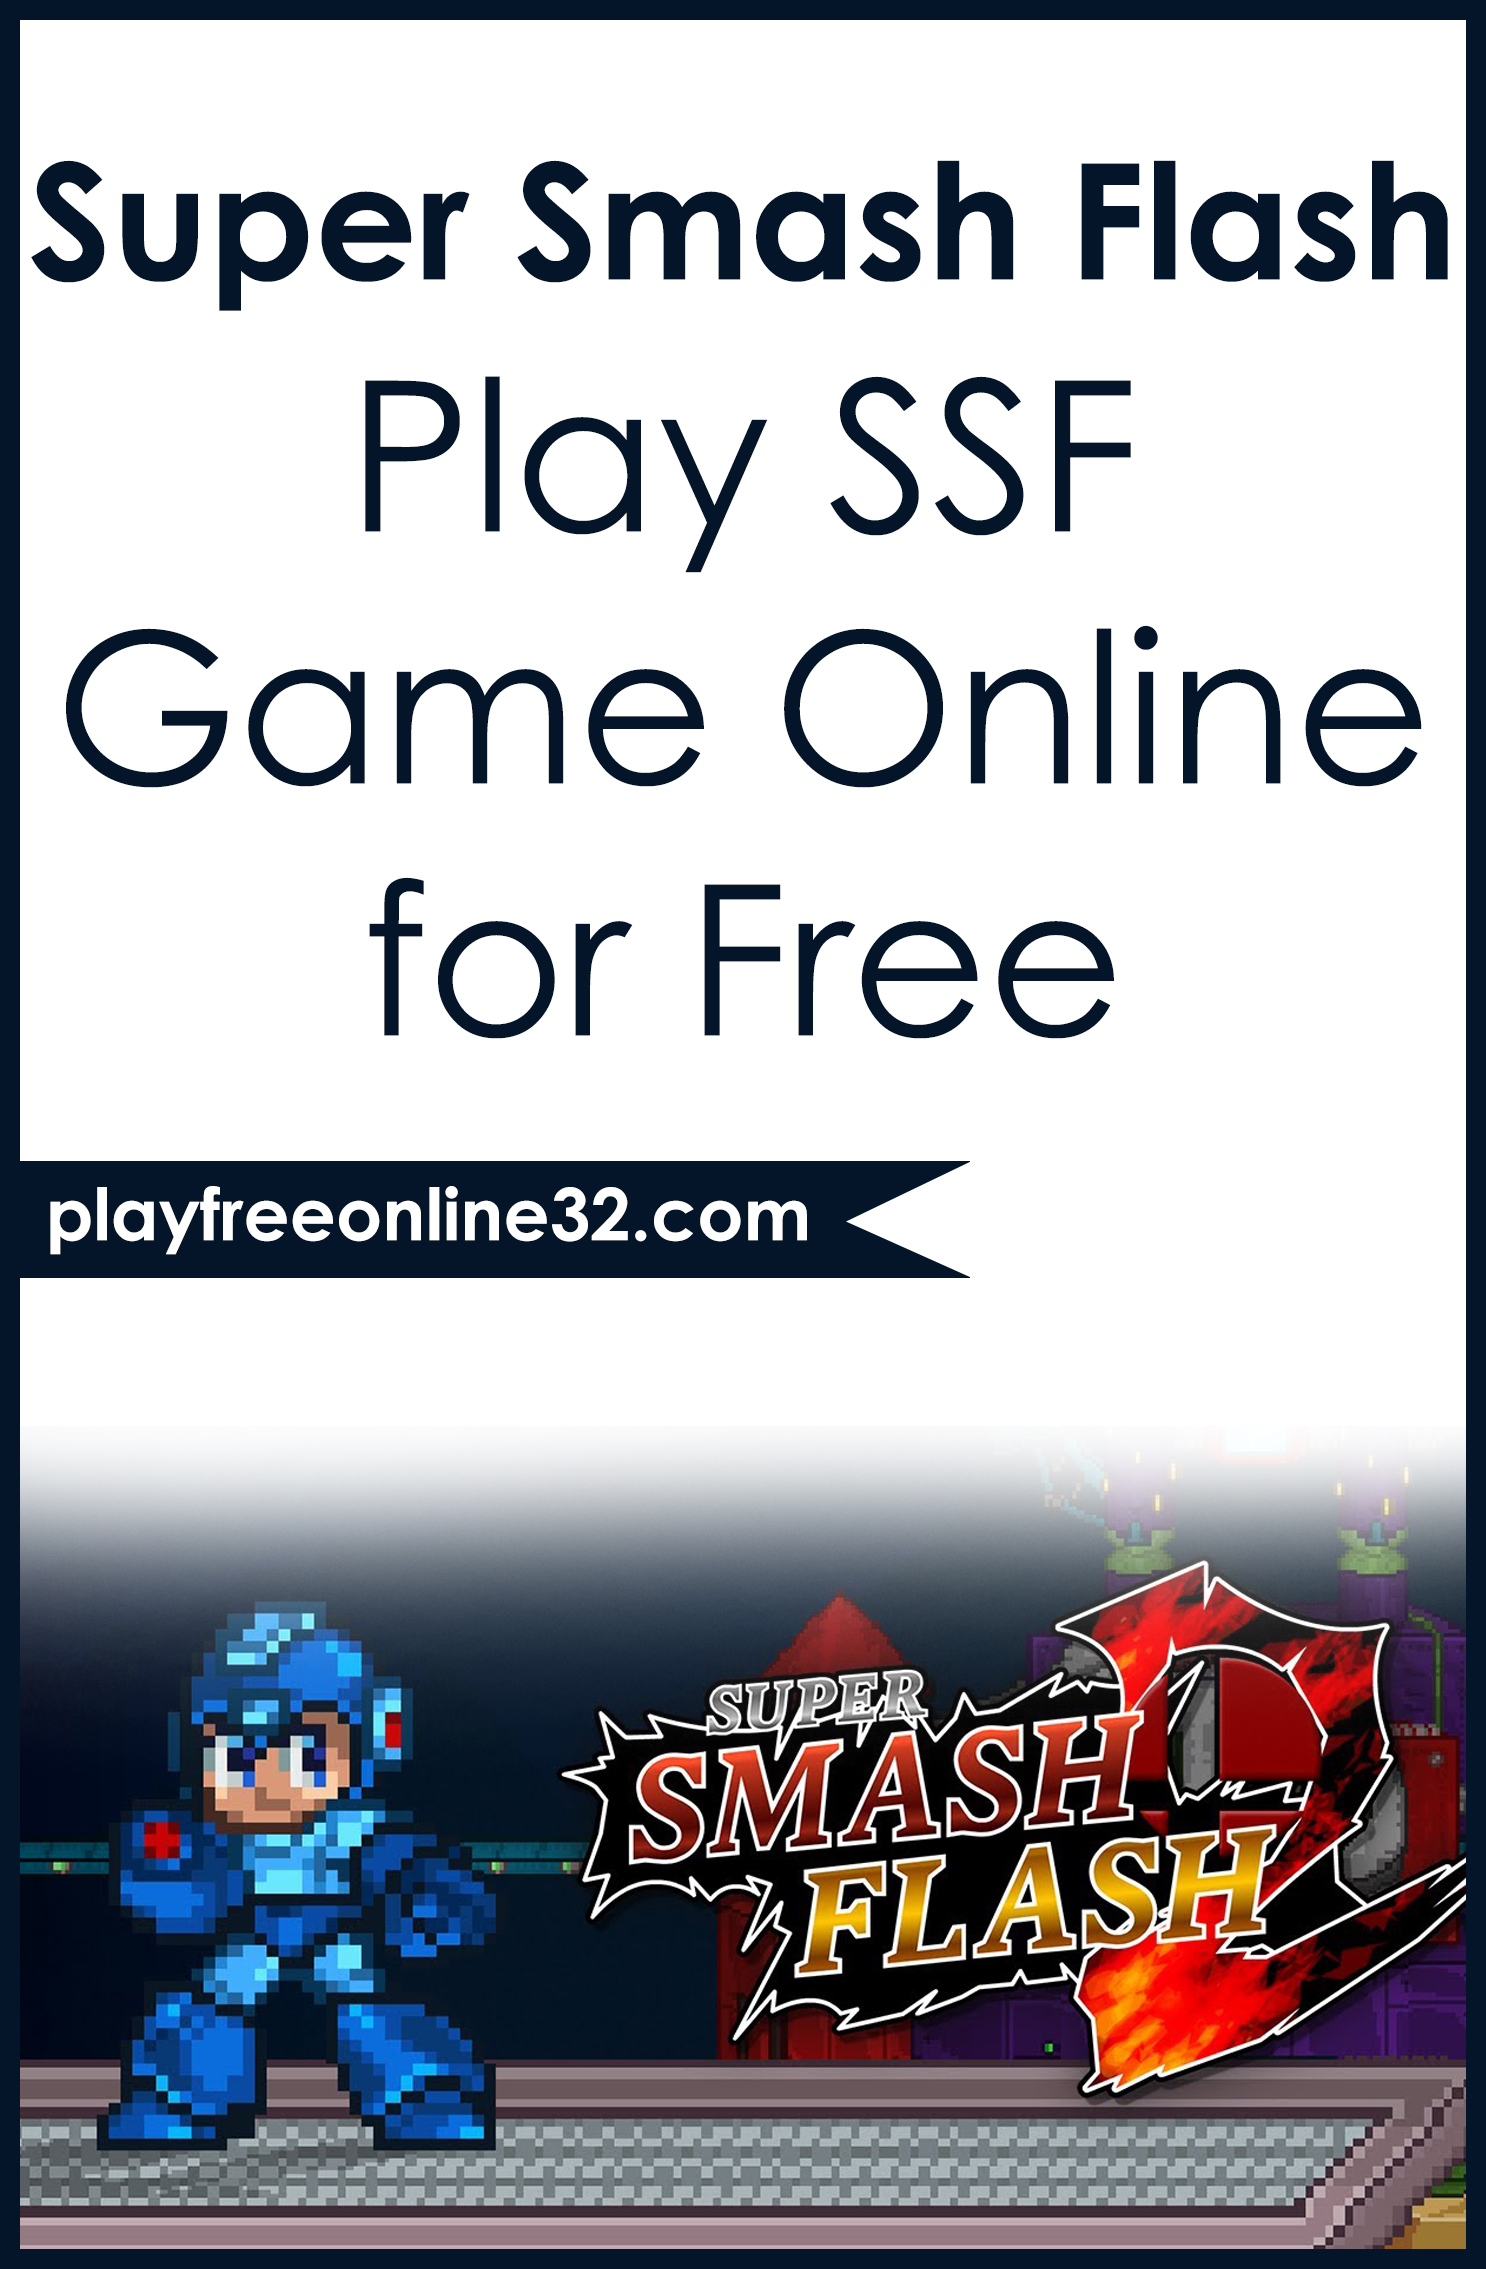 Super Smash Flash • Play SSF Game Online for Free Pinterest